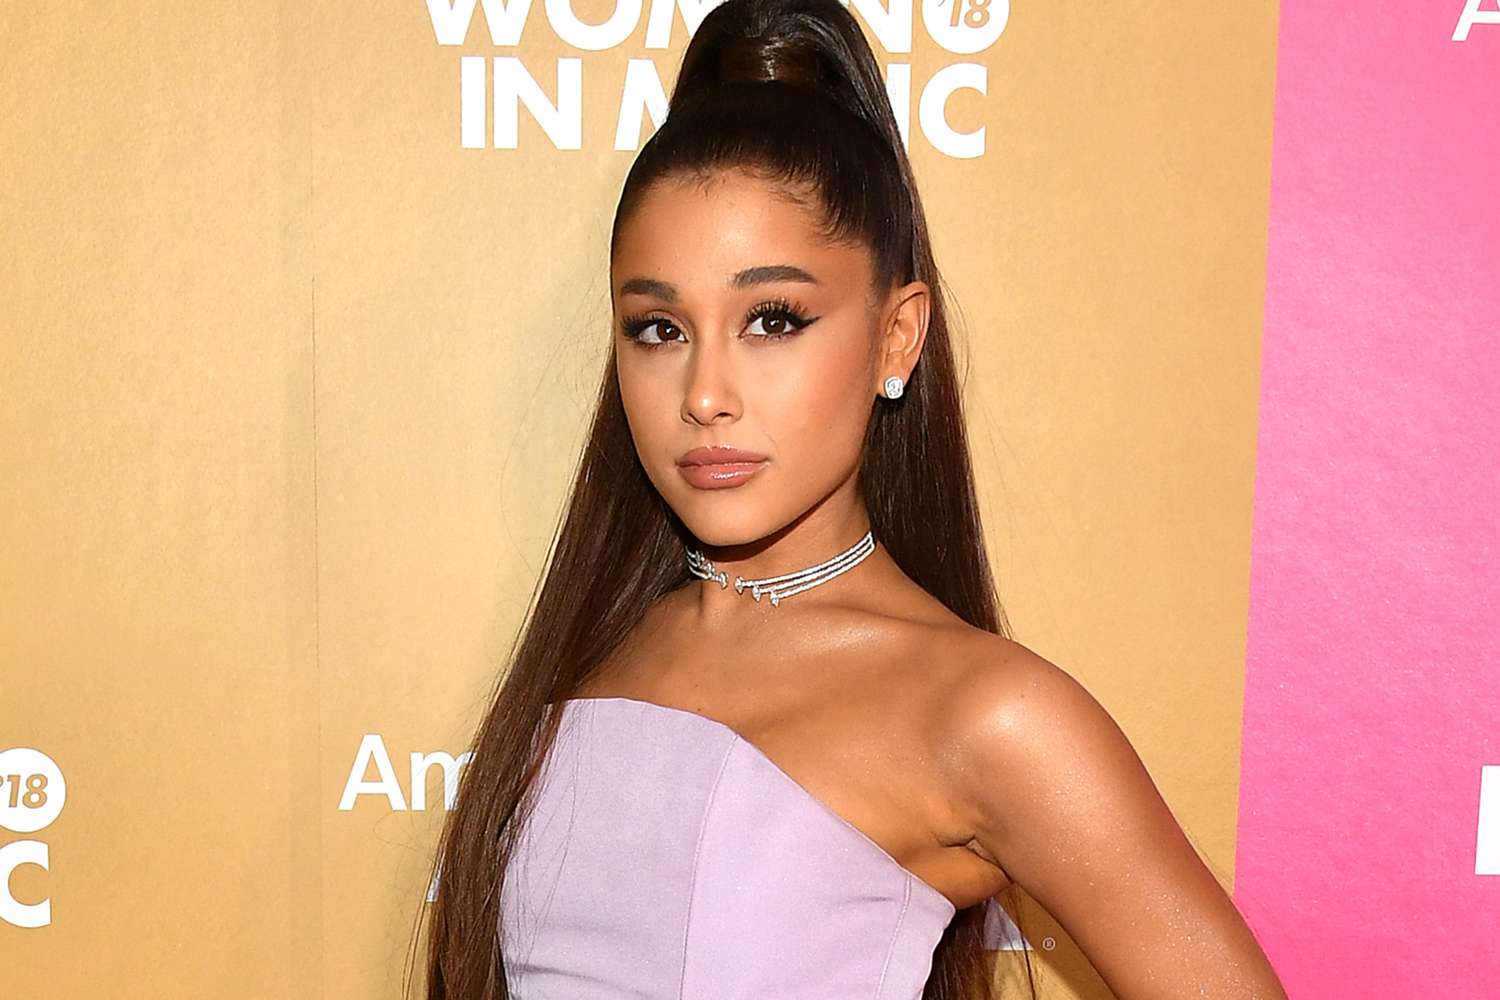 Ariana Grande wearing a purple dress